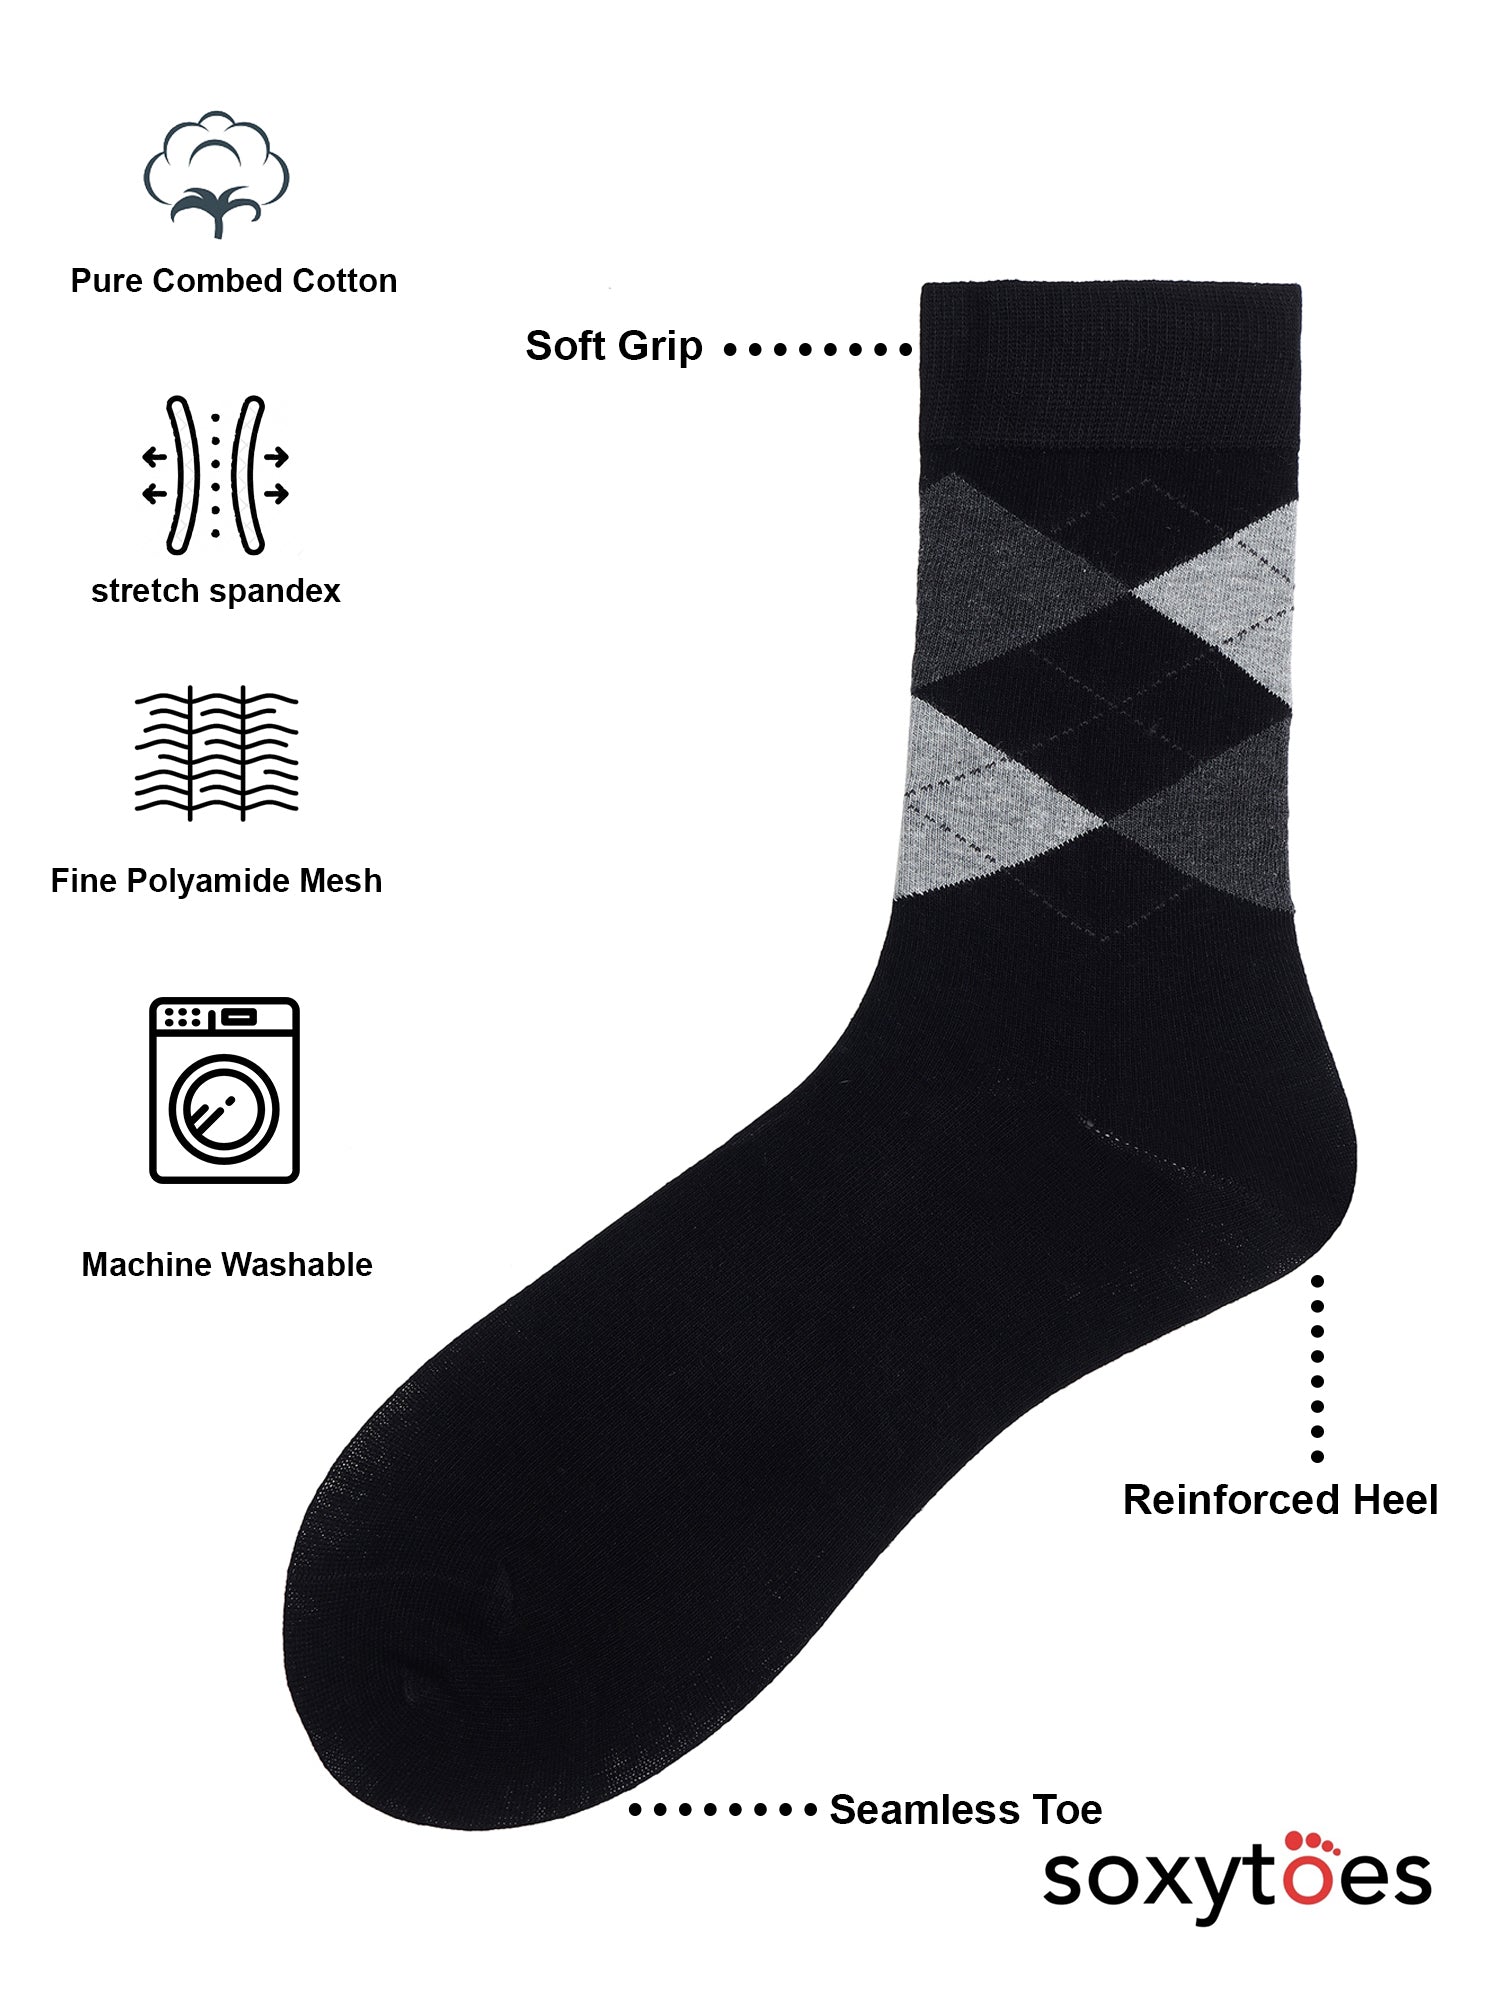 The Geometrics Socks